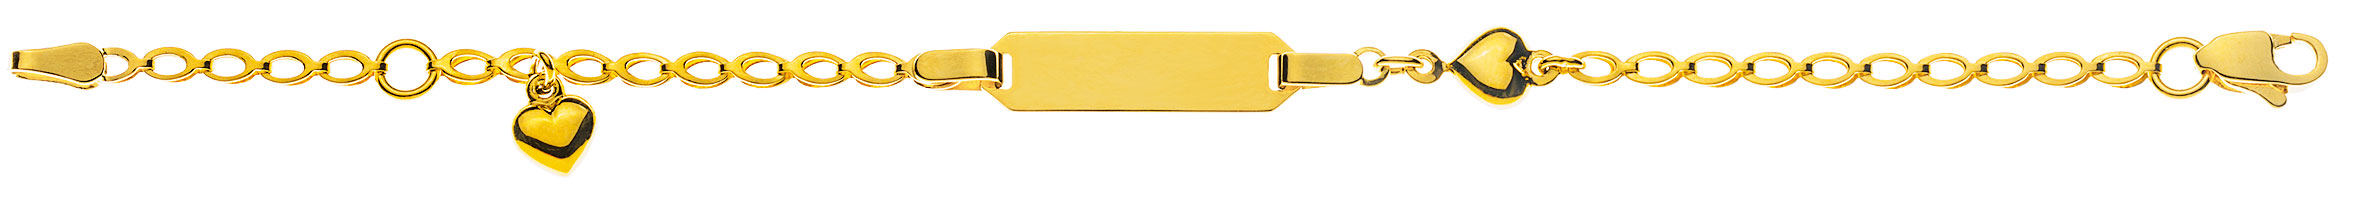 AURONOS Prestige ID bracelet 18k yellow gold fantasy chain 14cm